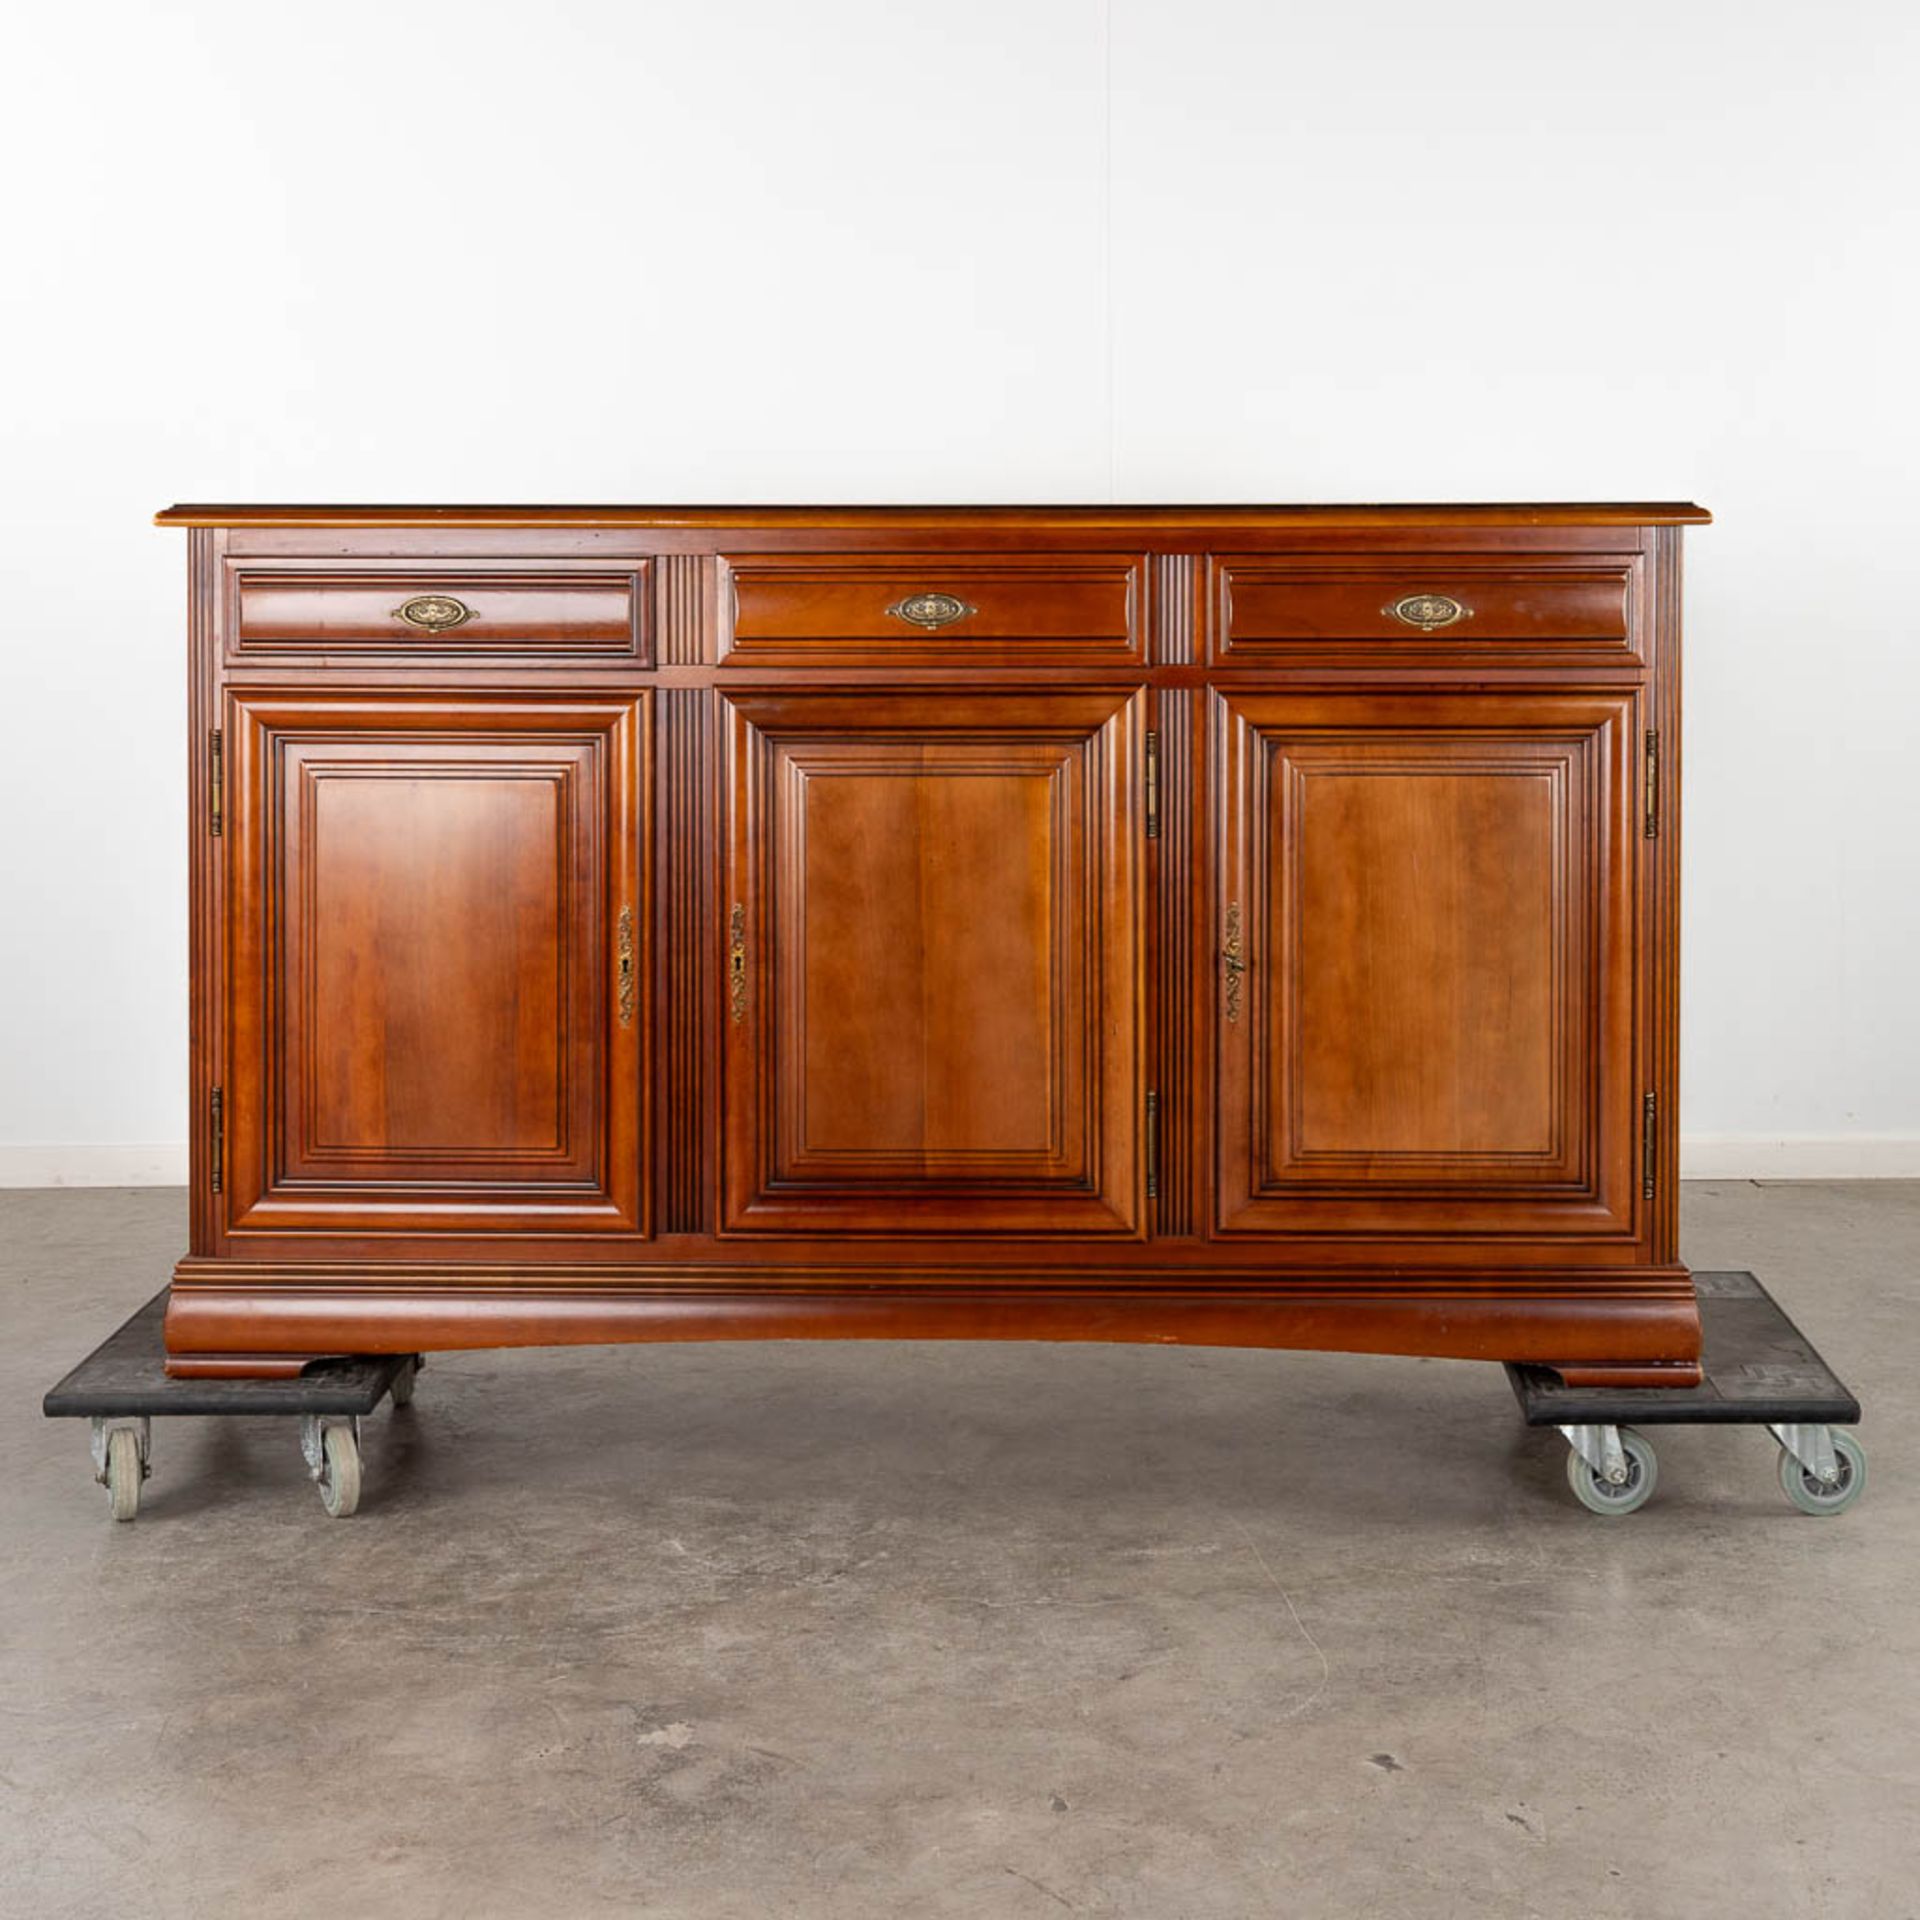 A dresser with 3 door s and 3 drawers, 20th C. (D:50 x W:171 x H:97 cm) - Image 5 of 18